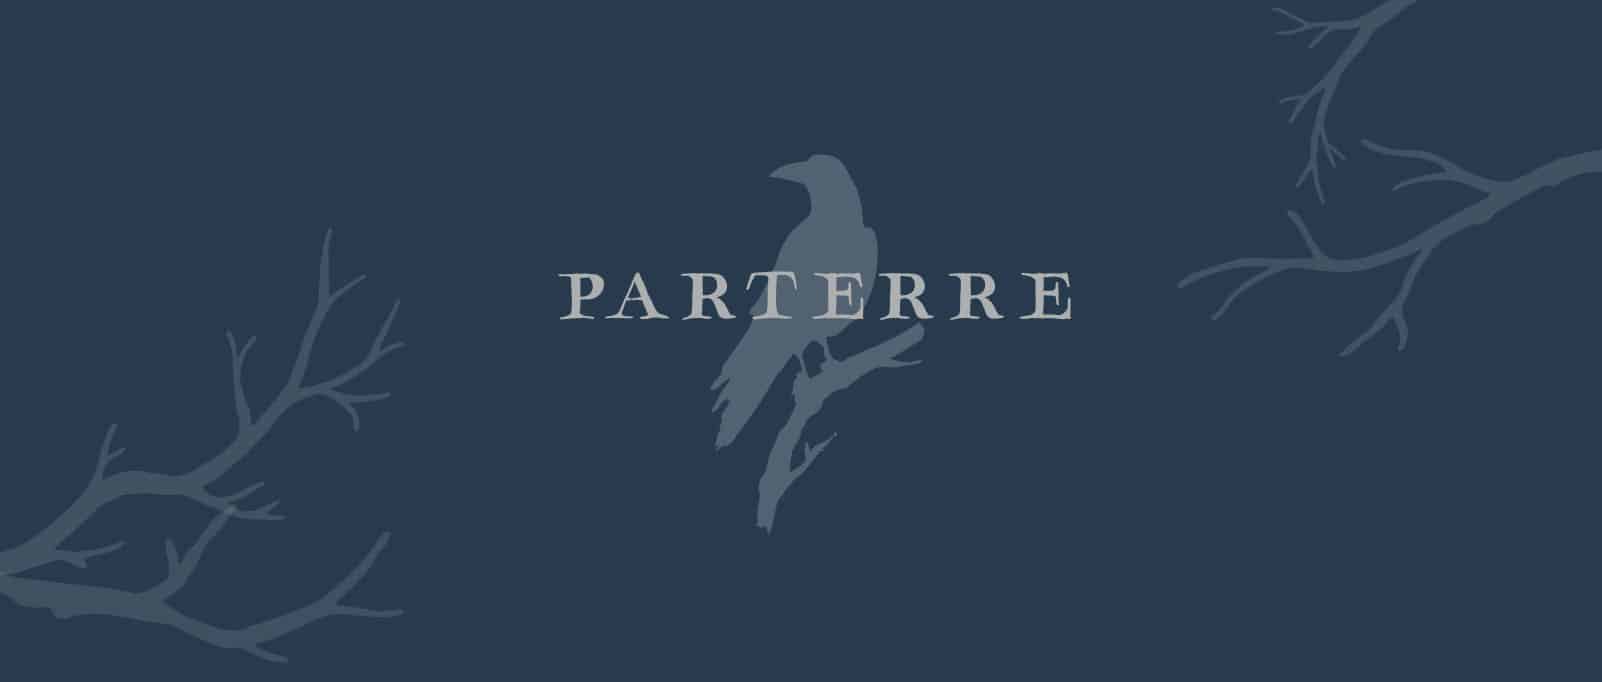 Logo design parterre restaurant case study